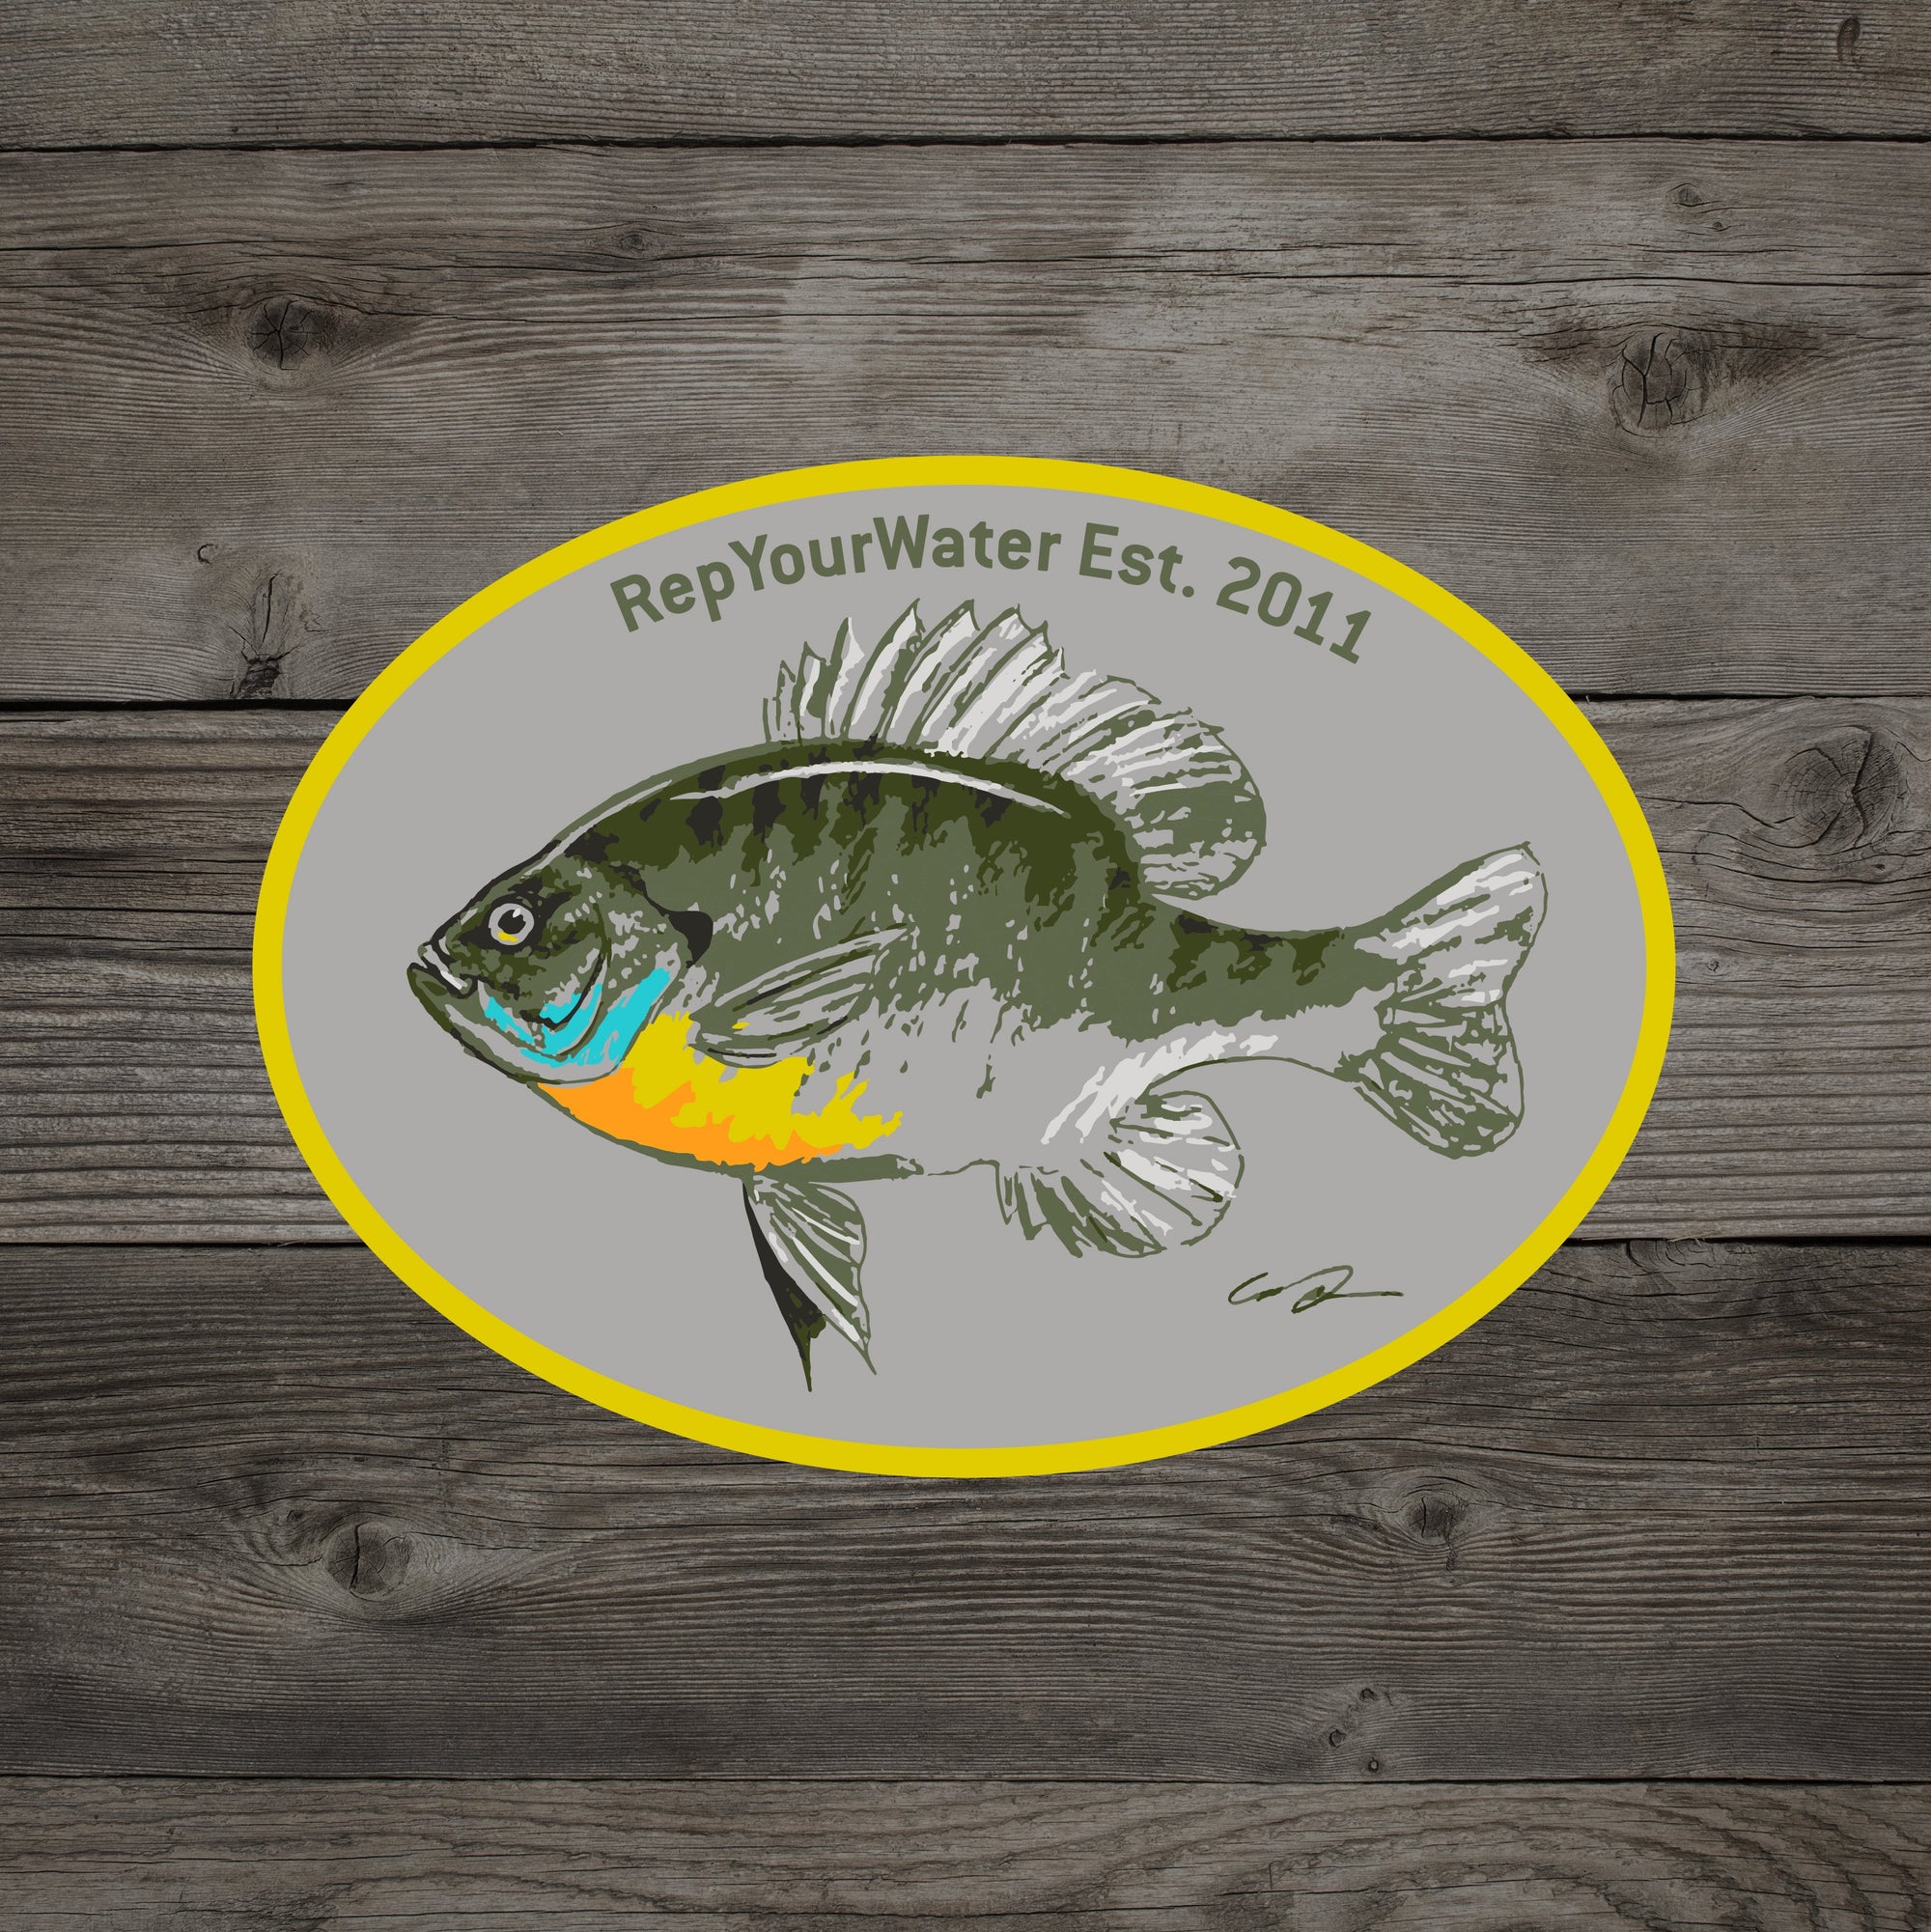 Rep Your Water Artist's Reserve Bluegill Sticker